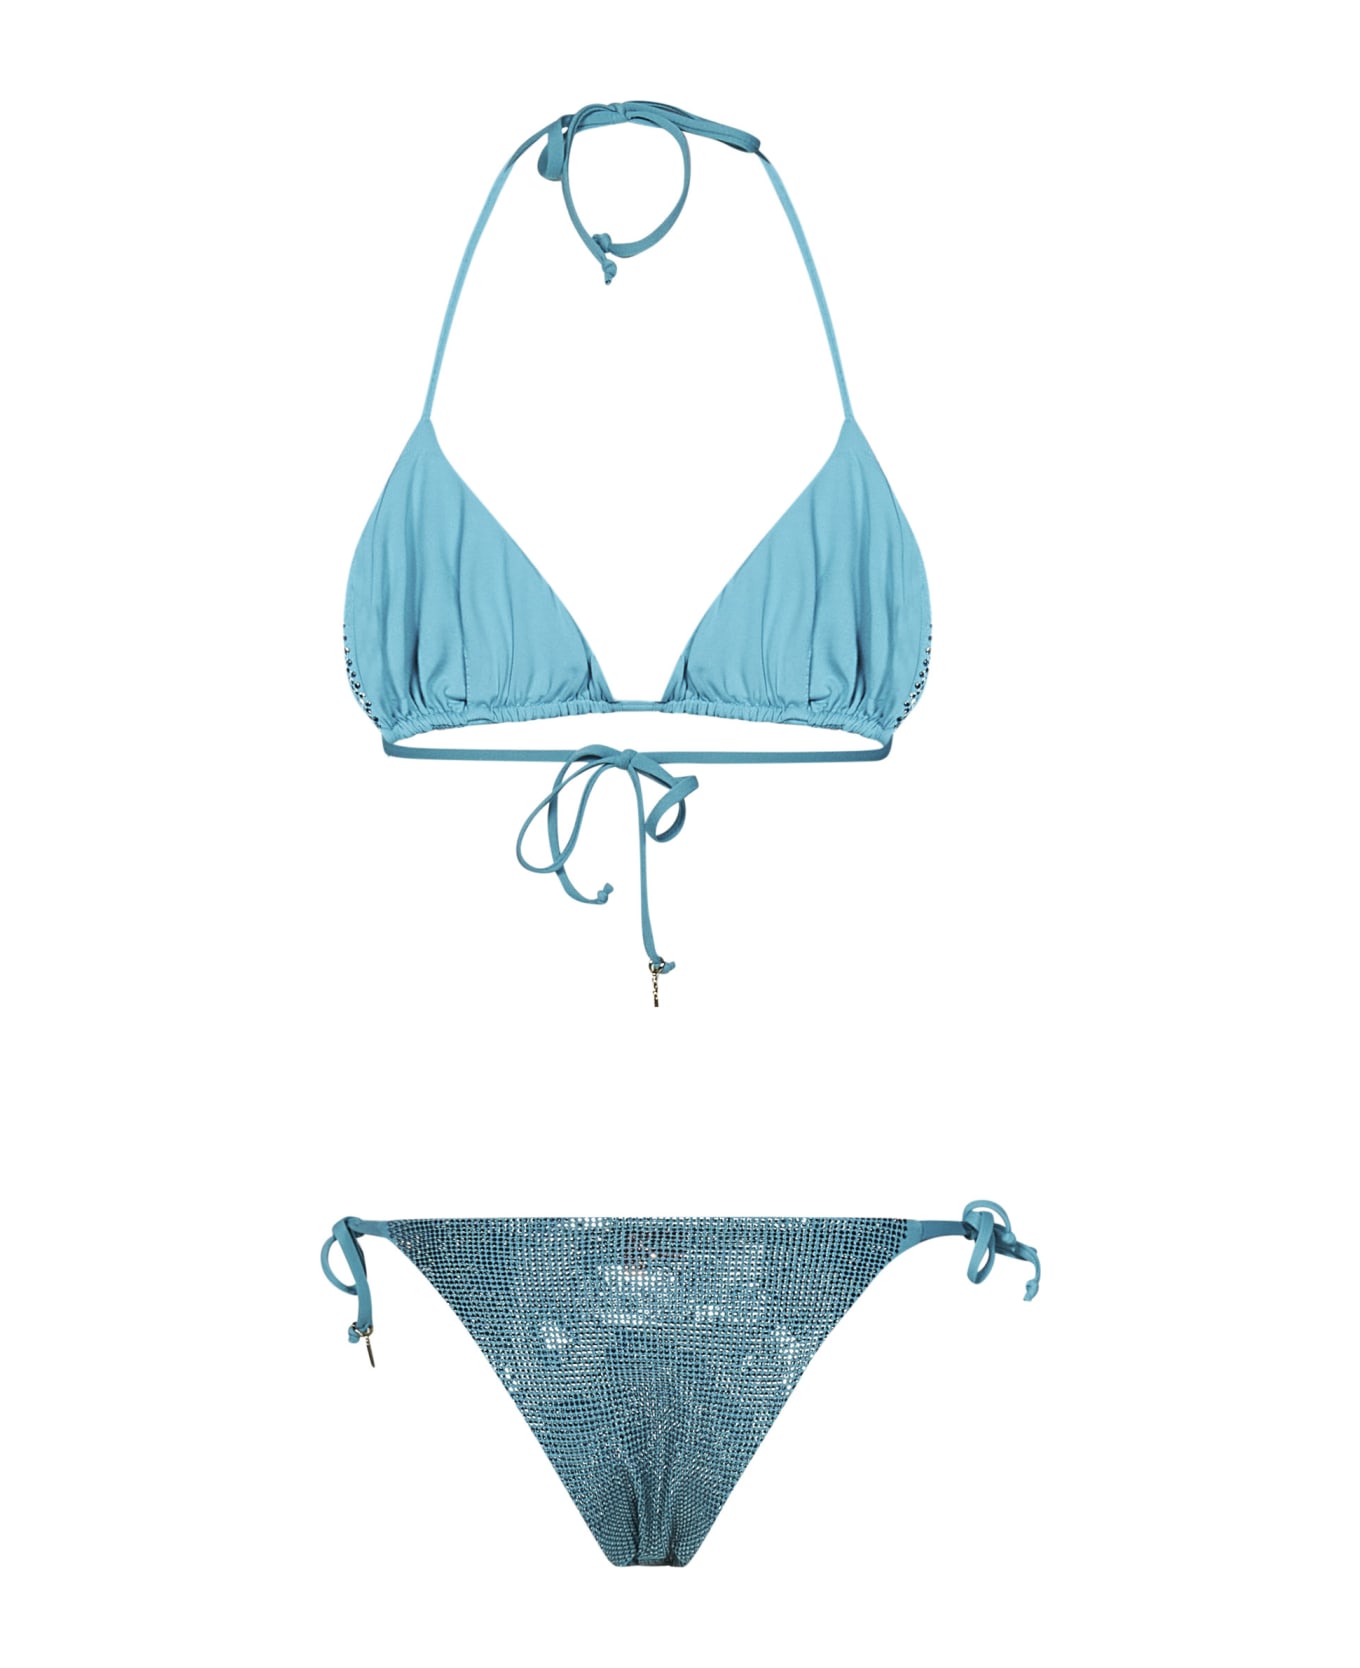 Fisico - Cristina Ferrari Fisico Bikini - Clear Blue